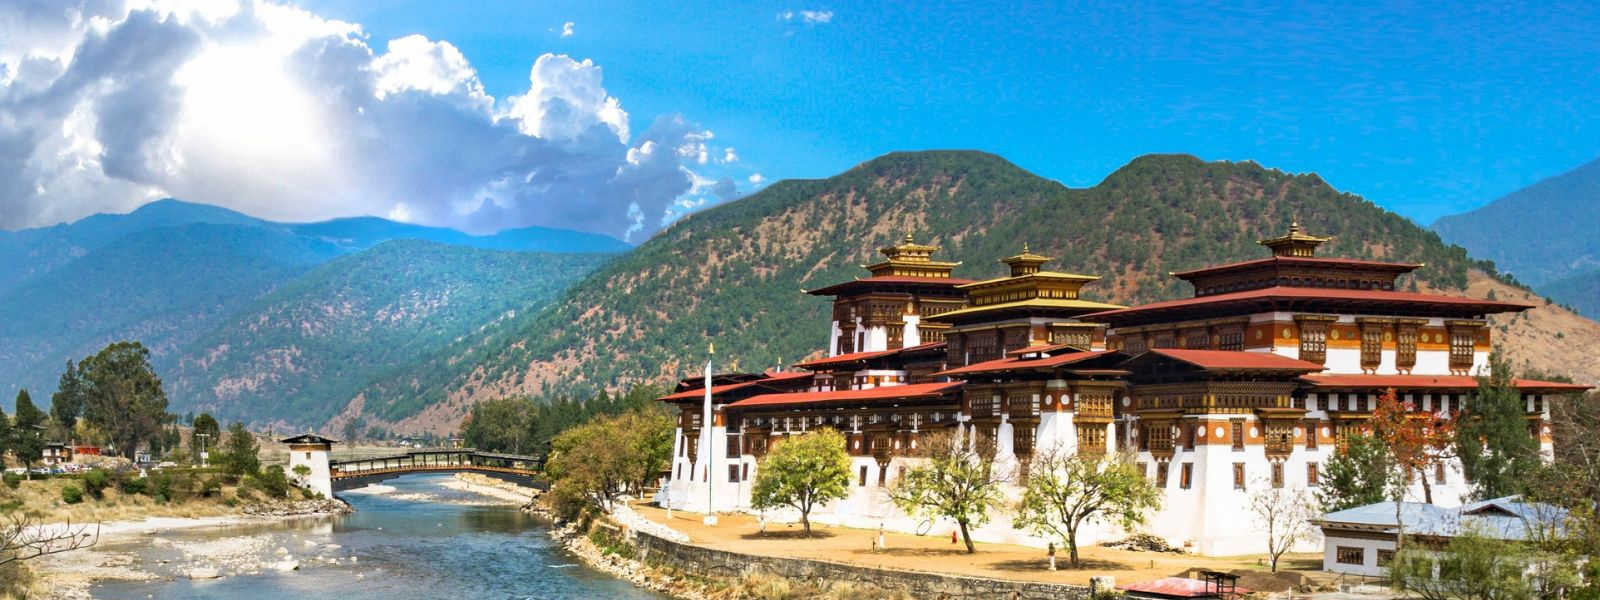 Bhutan Tour - 5 Days